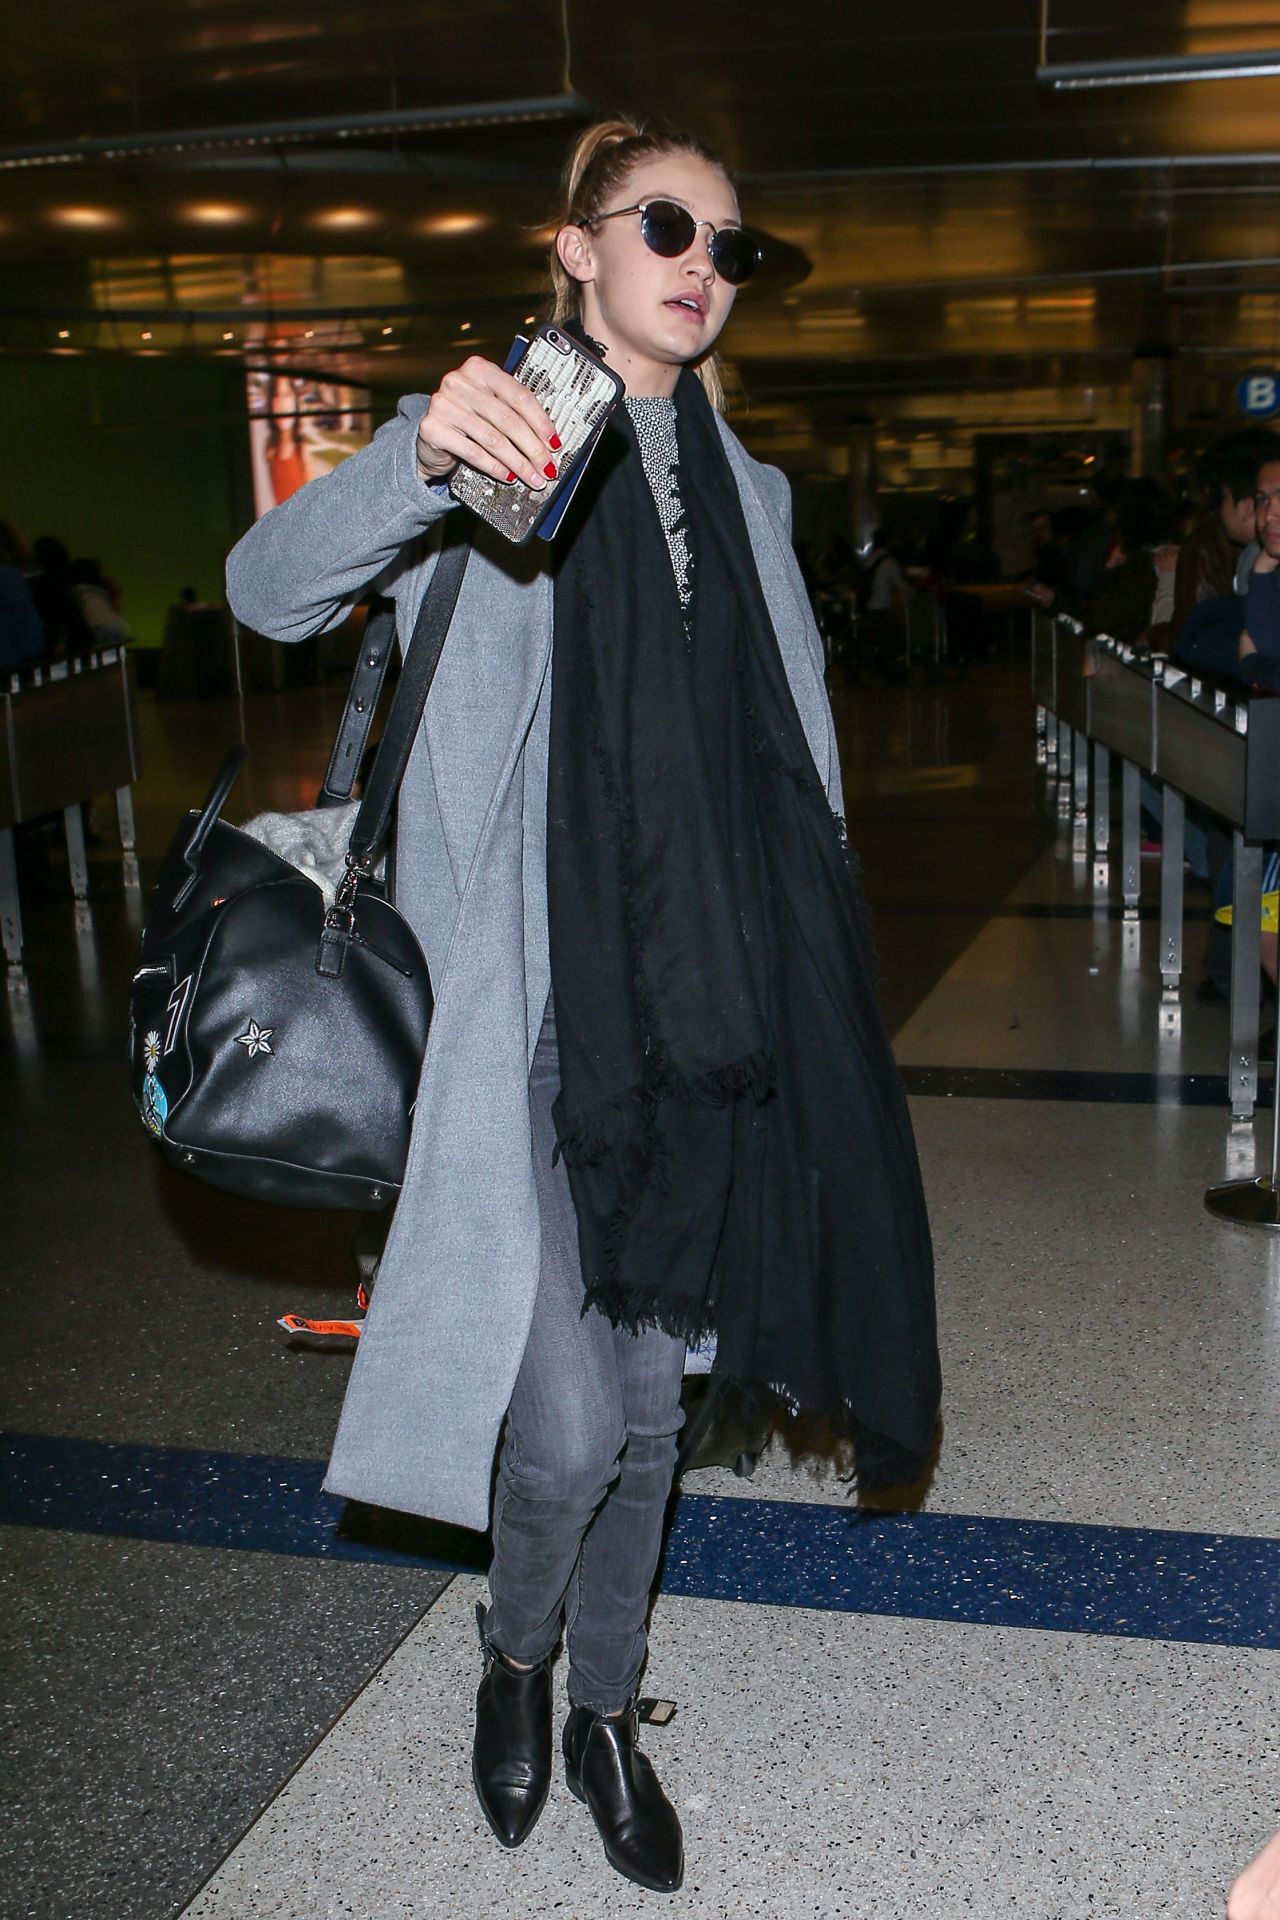 Gigi Hadid LAX Airport December 27, 2014 – Star Style